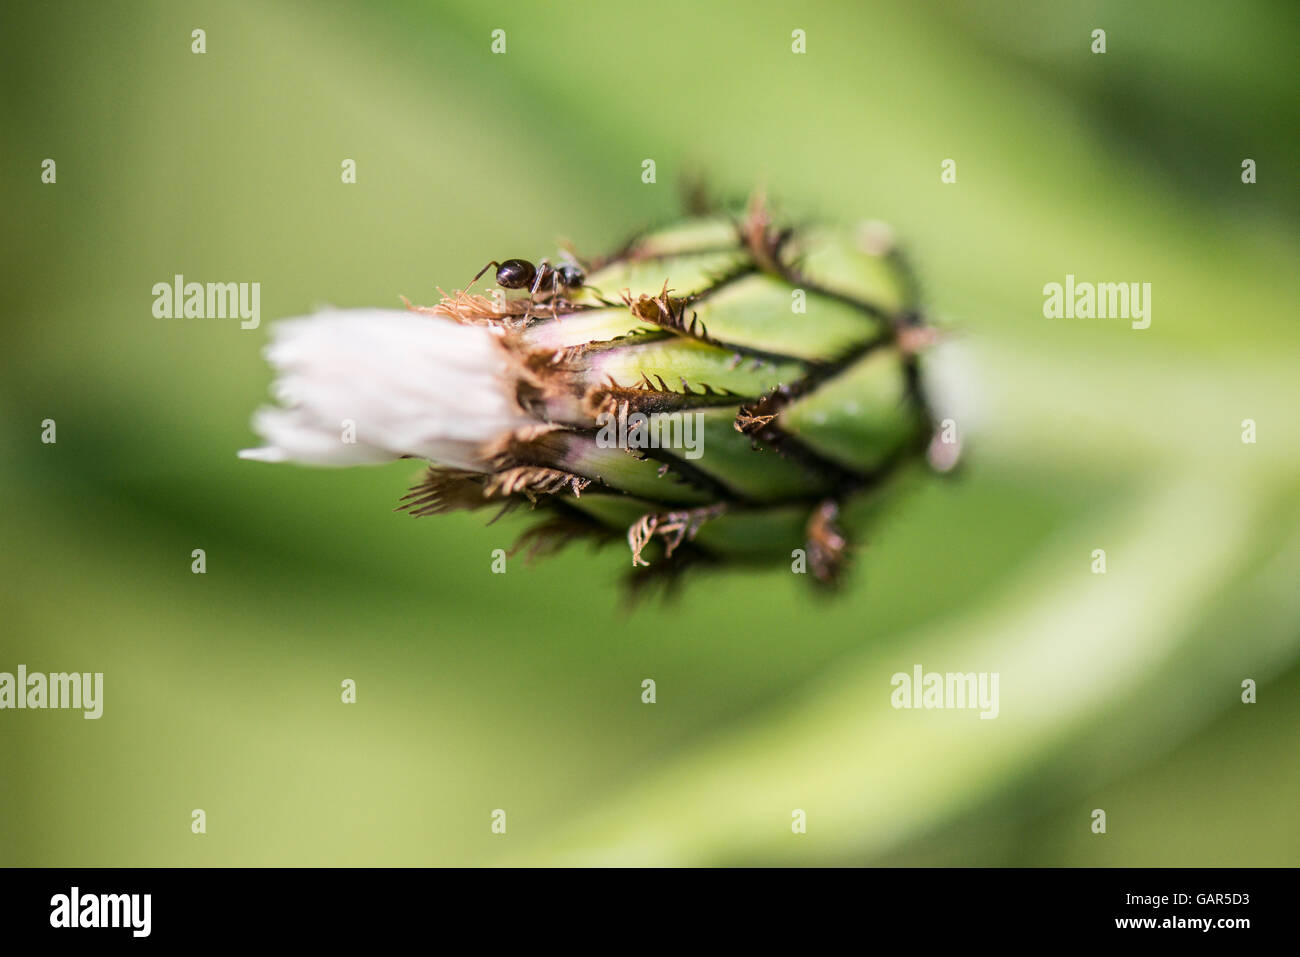 An ant on a white perennial cornflower bud (Centaurea montana Alba) Stock Photo